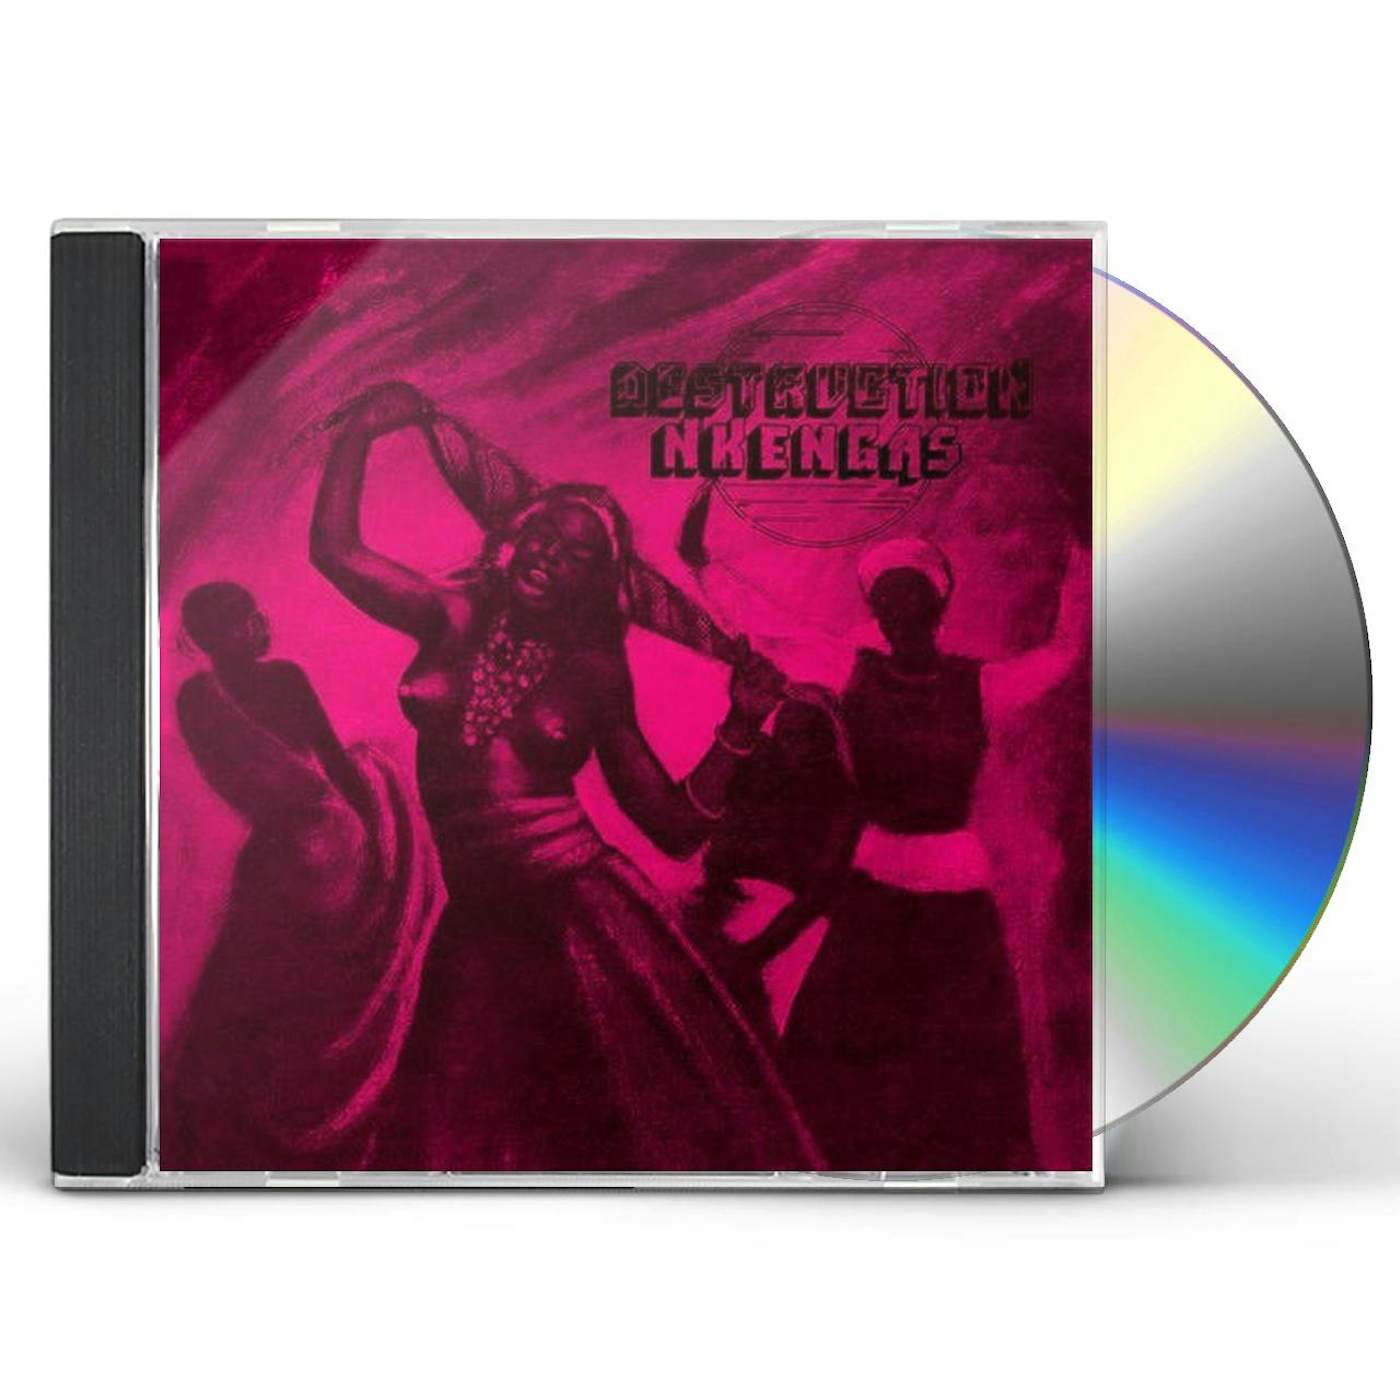 The Nkengas DESTRUCTION CD